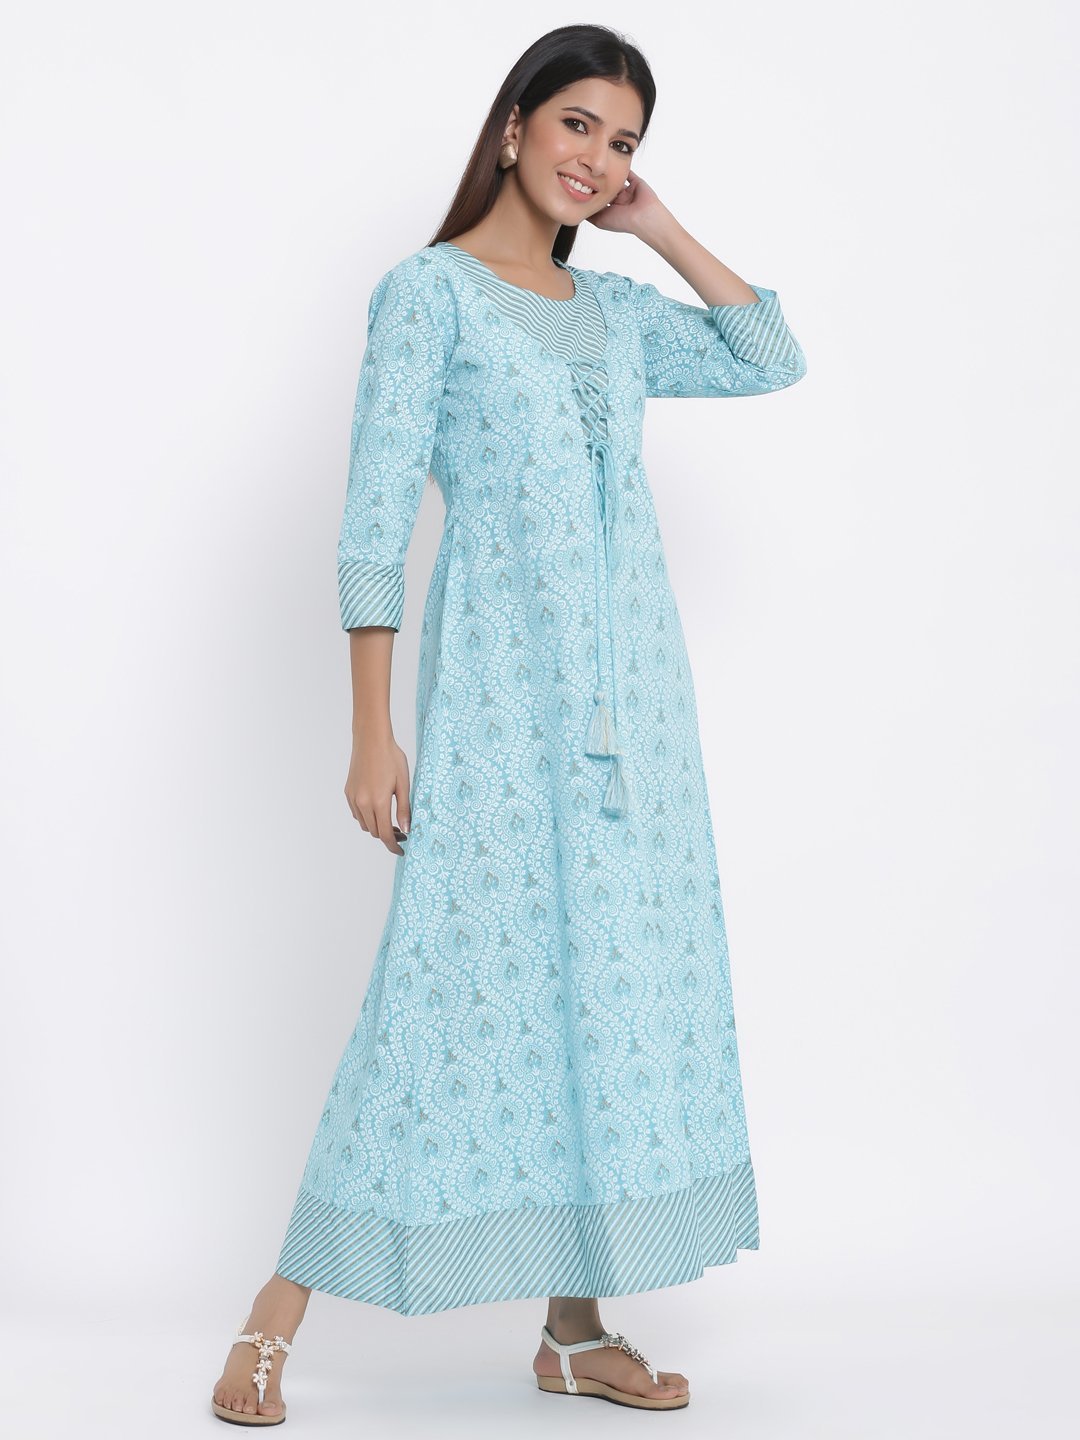 Women's Blue Printed Cotton Anarkali Kurta by Final Clearance Sale